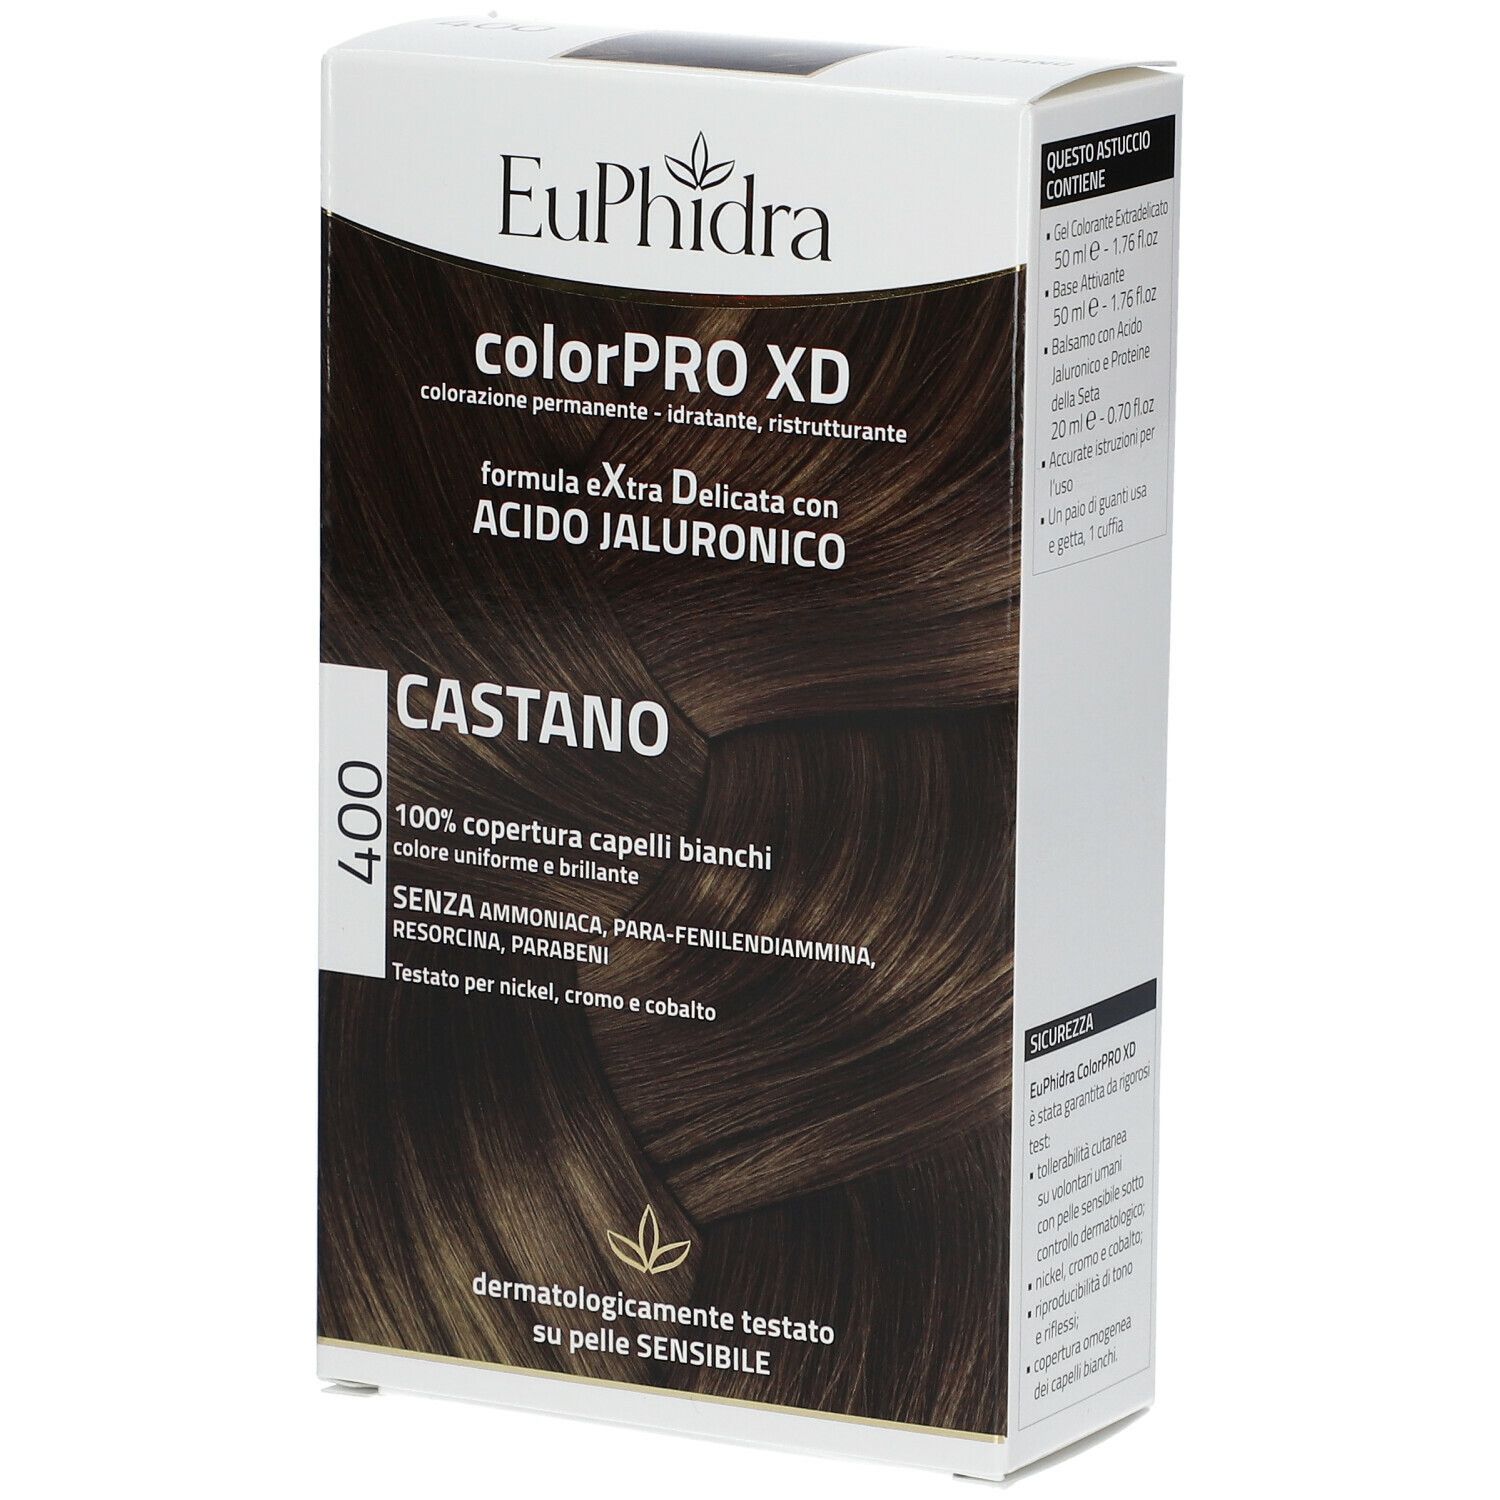 Euphidra ColorPRO XD Castano 400